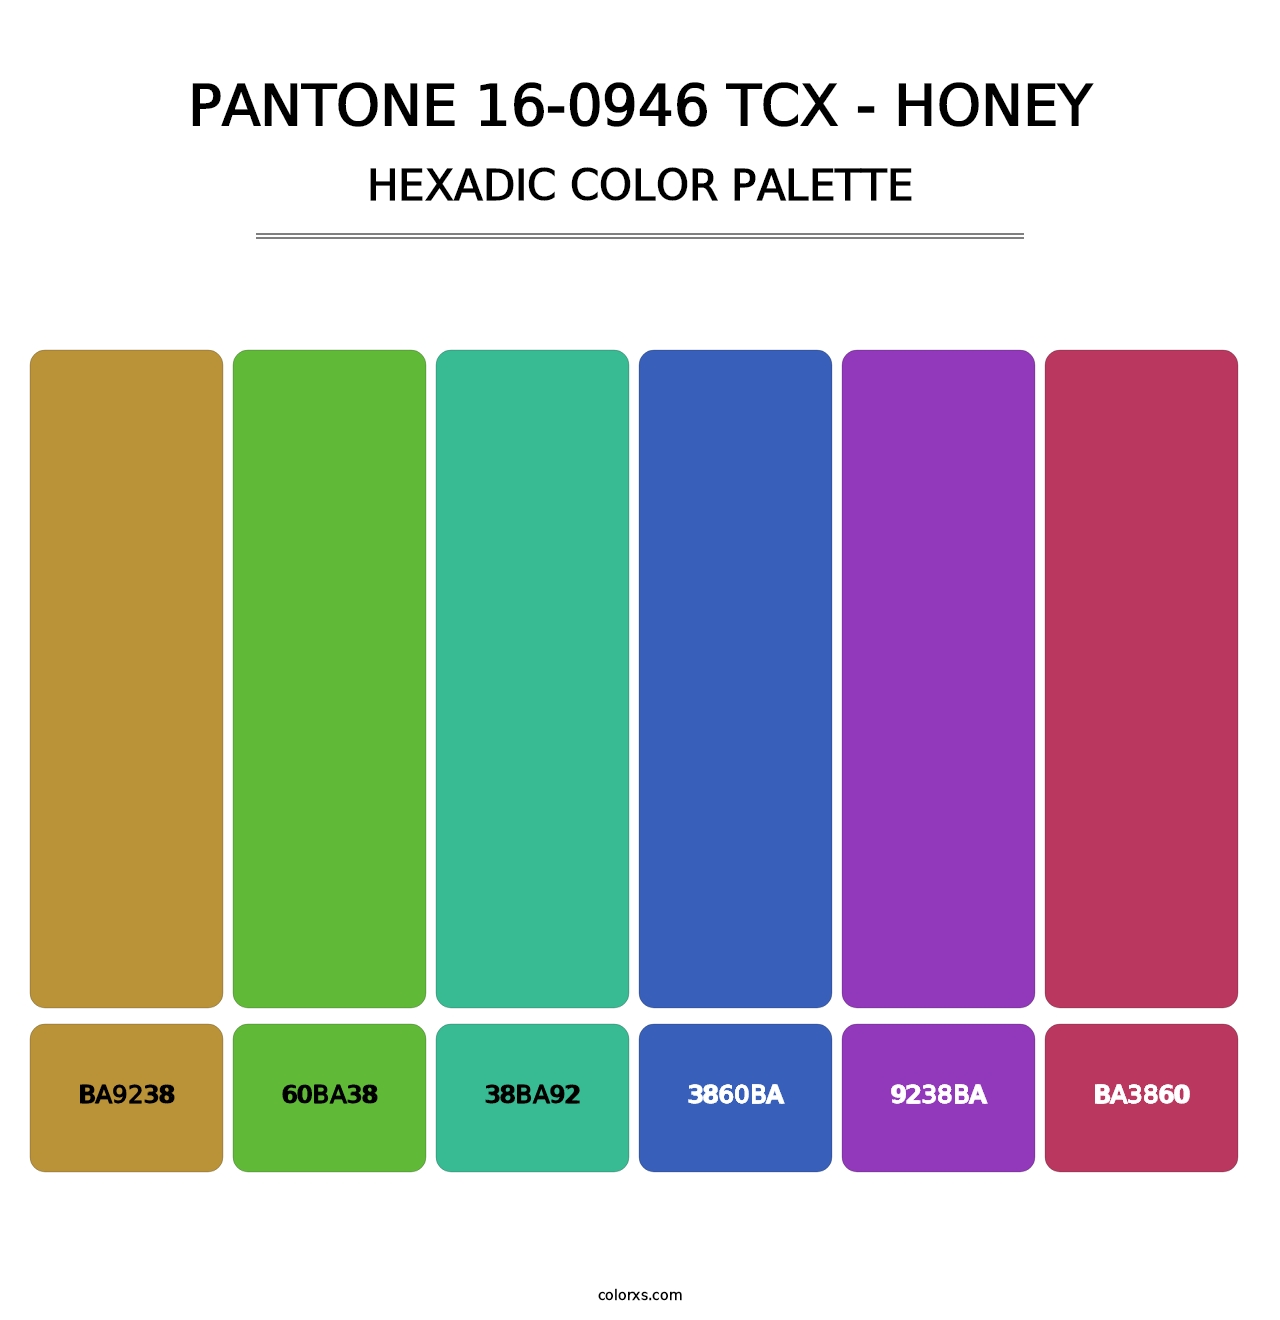 PANTONE 16-0946 TCX - Honey - Hexadic Color Palette